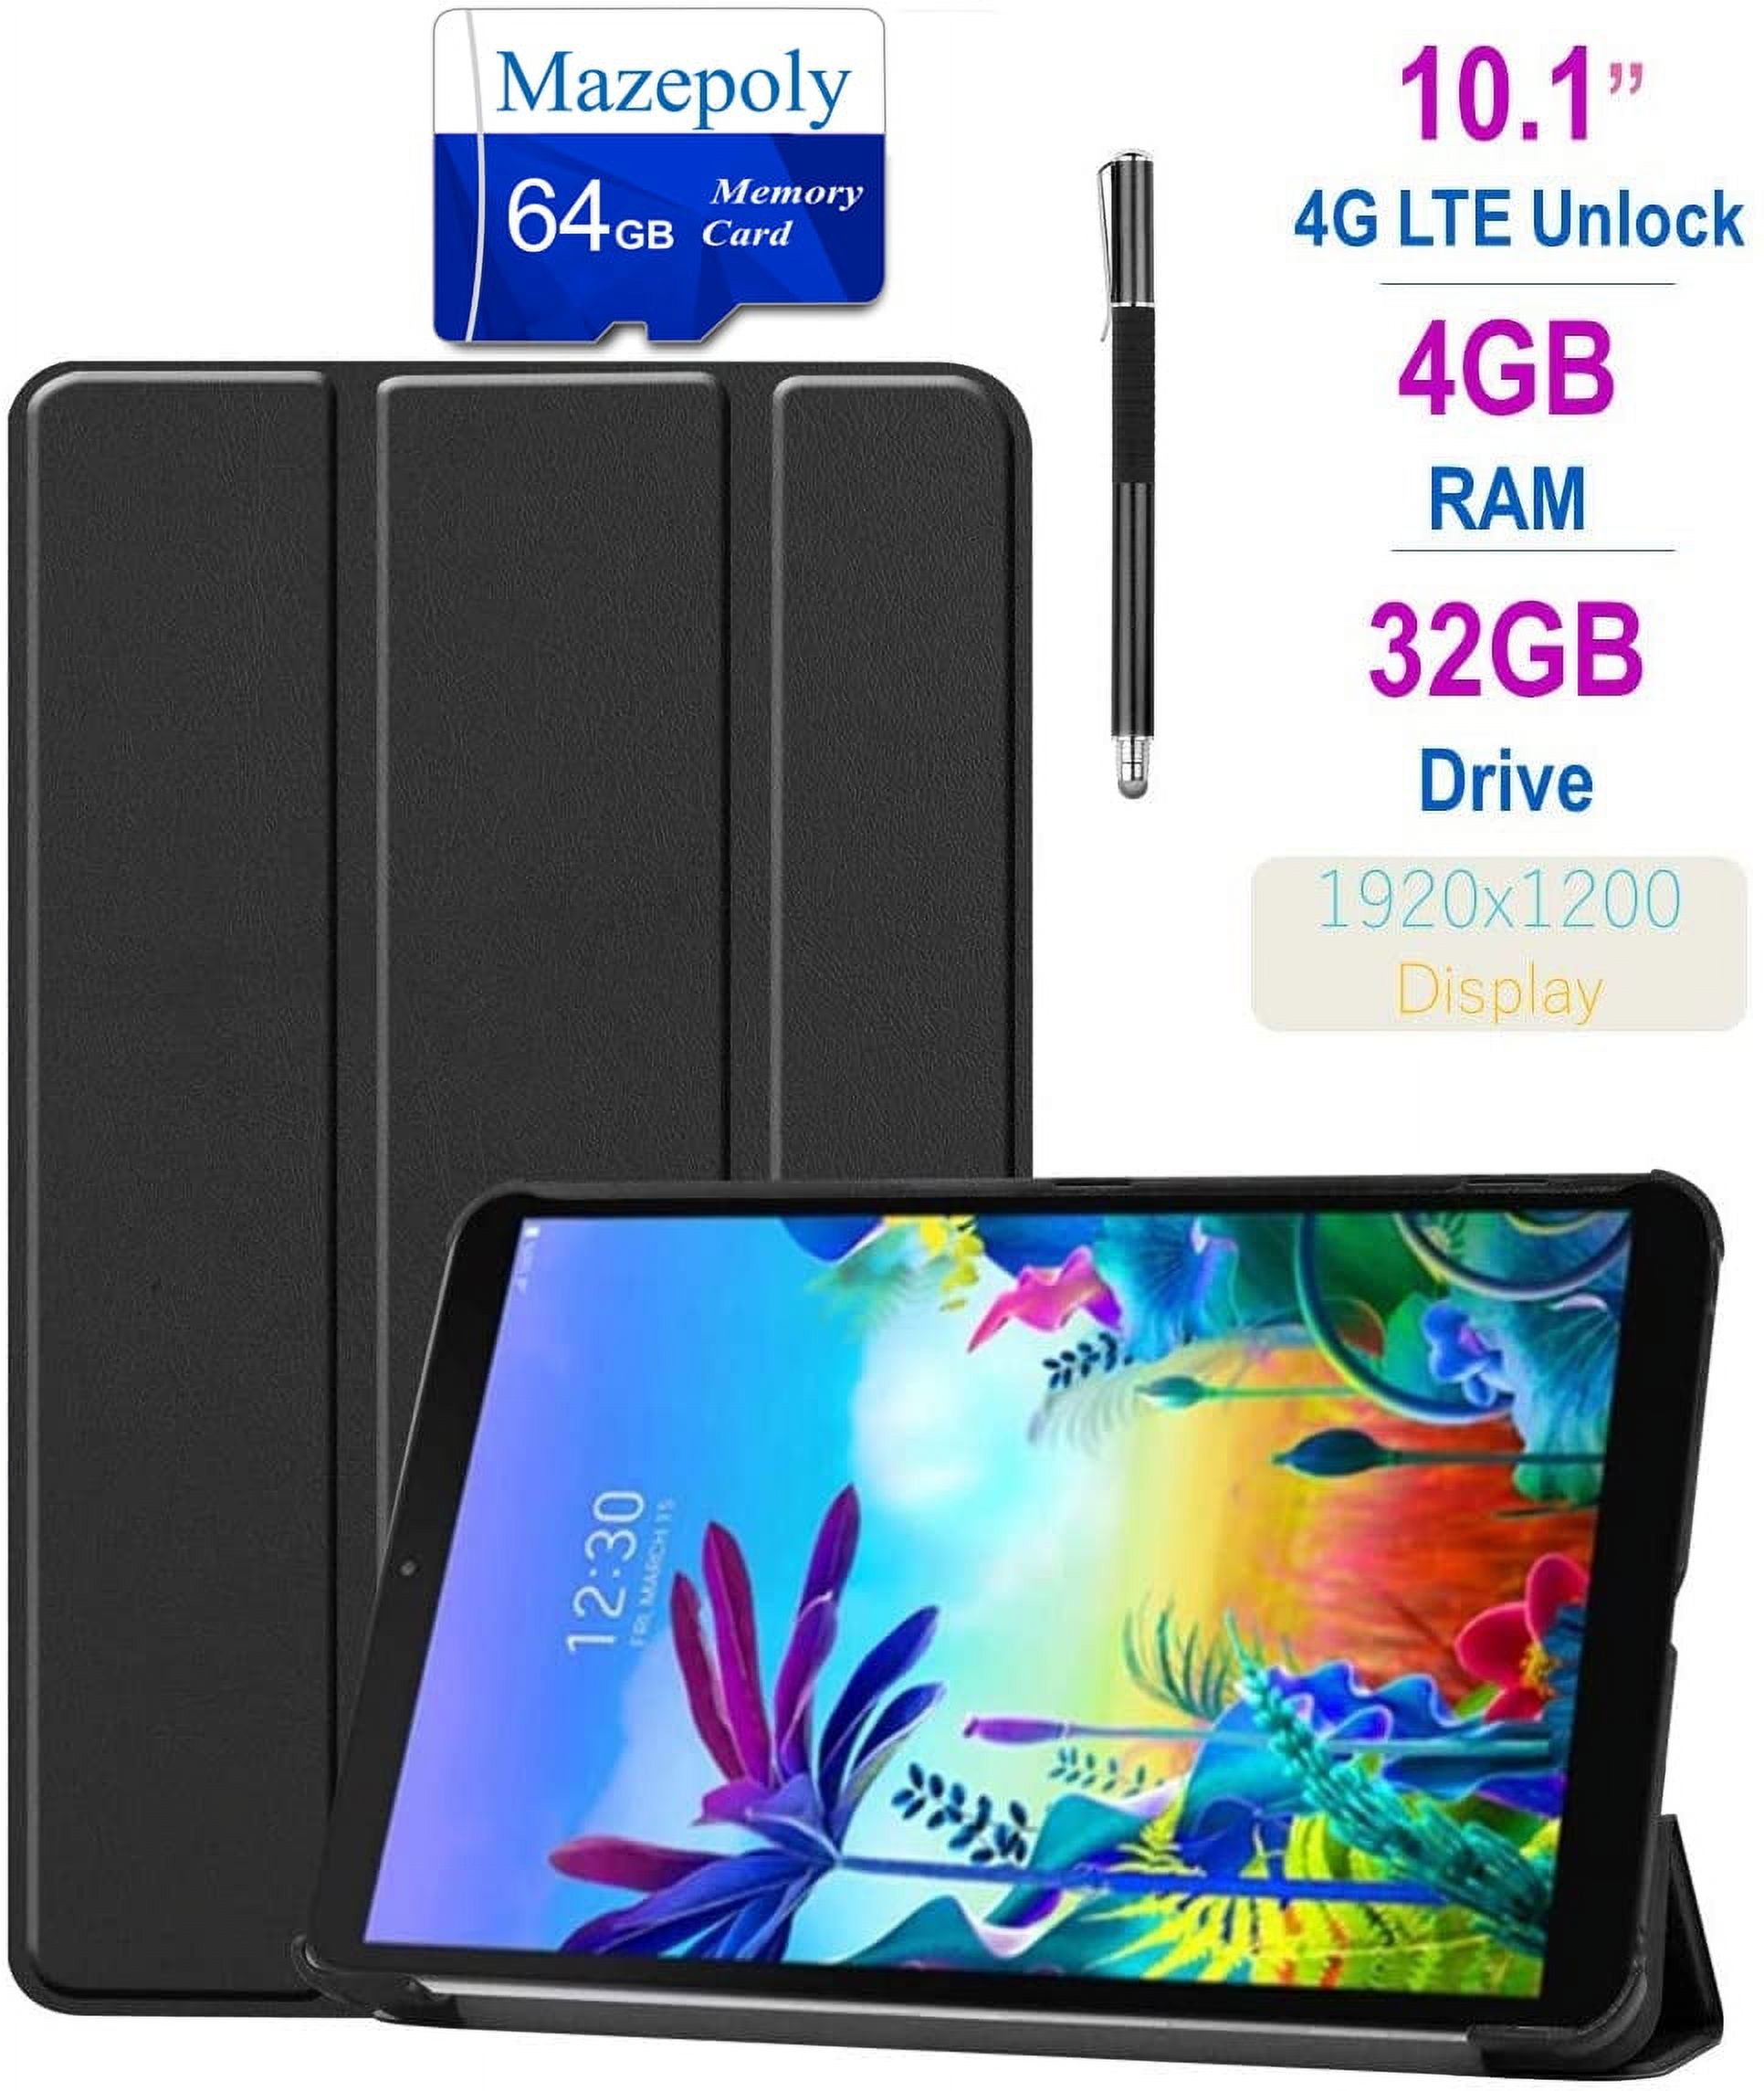 LG G Pad 5 Tablet - 10.1" - 32 GB Storage - Android 9.0 Pie - 4G - MediaTek MT6762 SoC - 5 Megapixel Front Camera - image 1 of 9